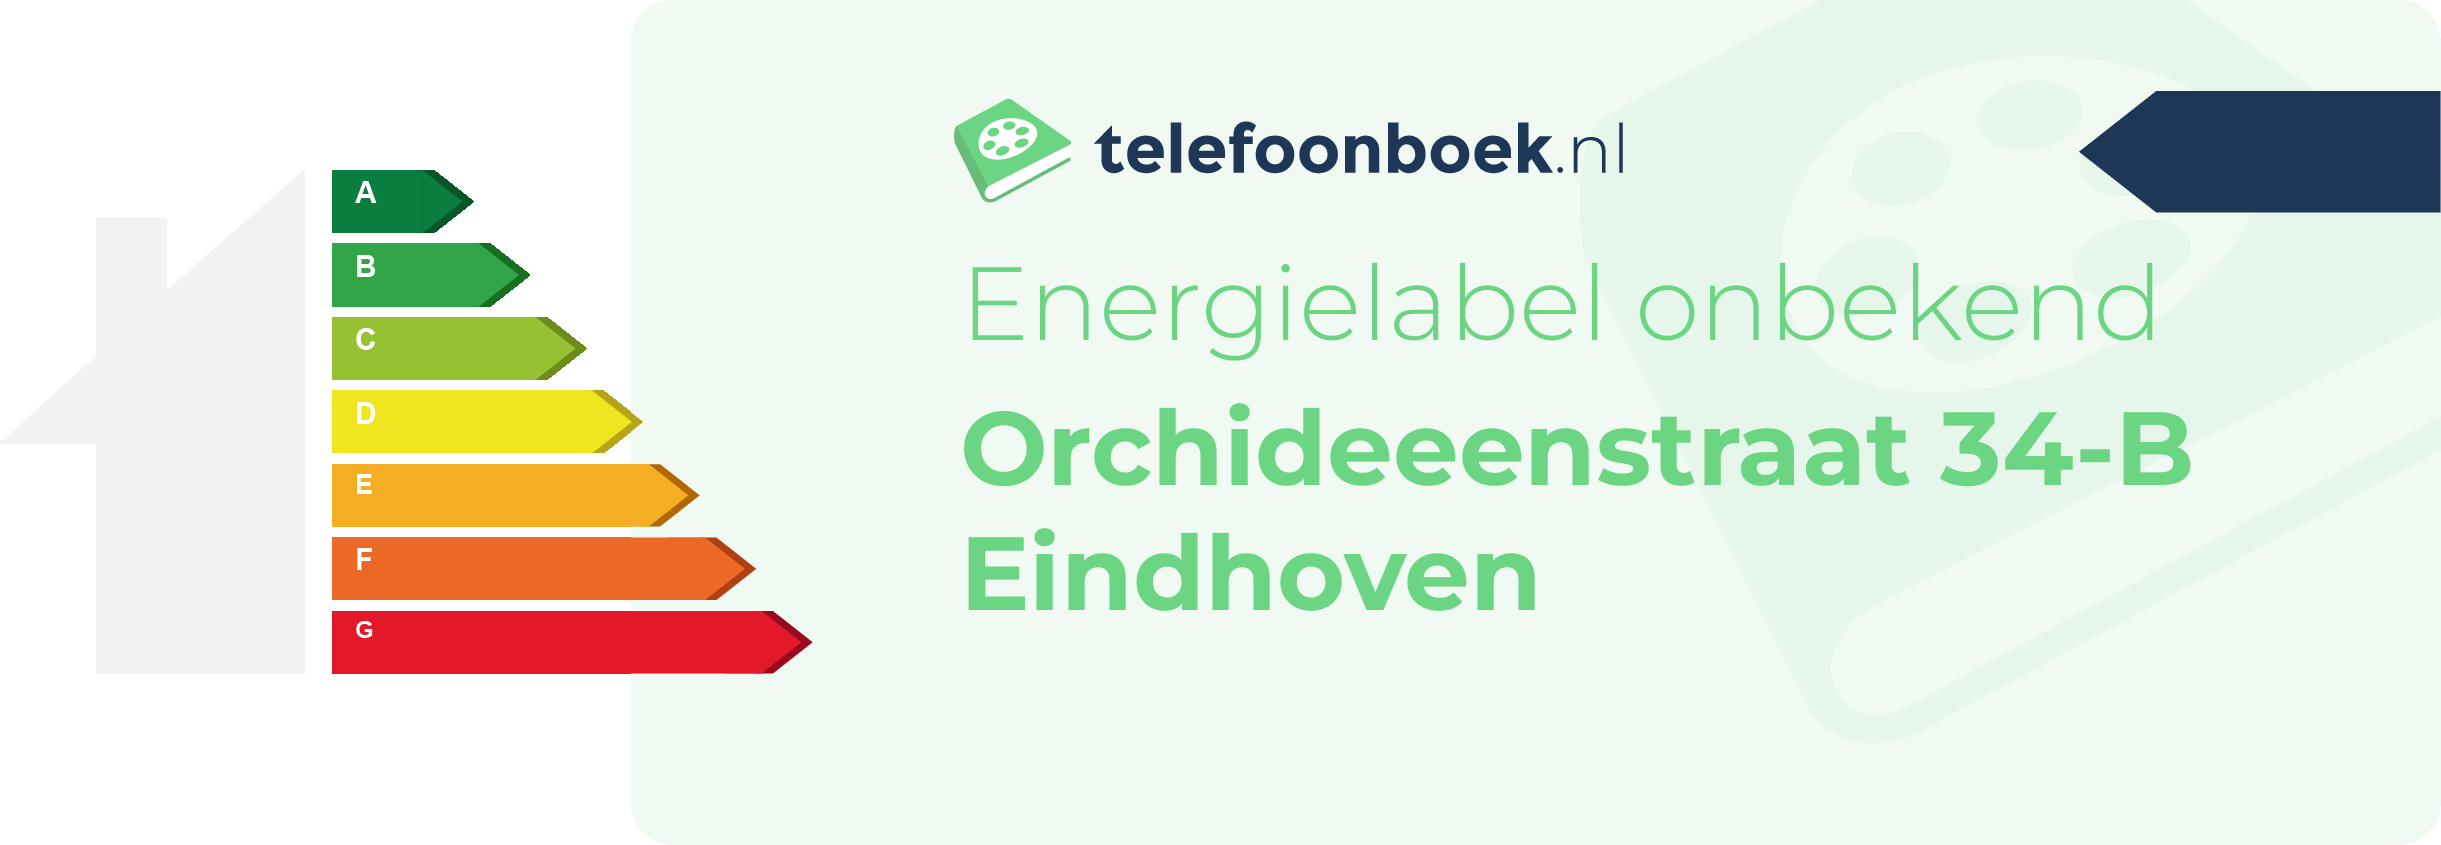 Energielabel Orchideeenstraat 34-B Eindhoven